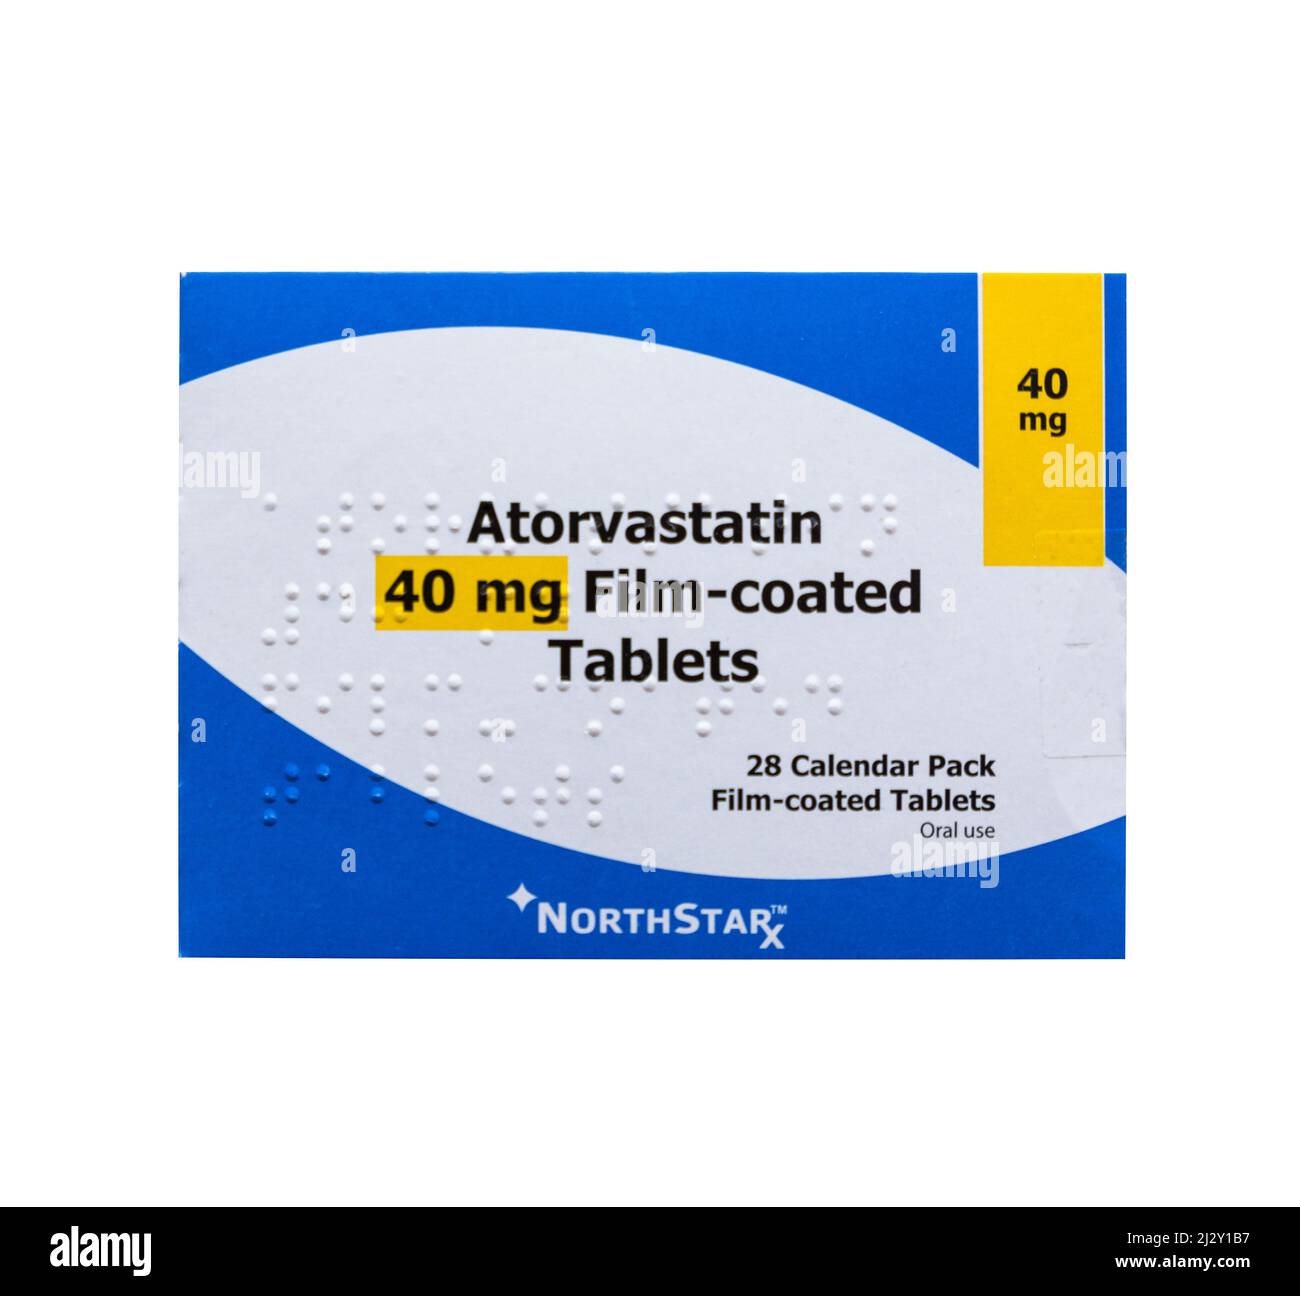 Northstar Atorvastatin 40 mg Filmbeschichtete Tabletten 28 Calendar Pack  Tablette Box Stockfotografie - Alamy